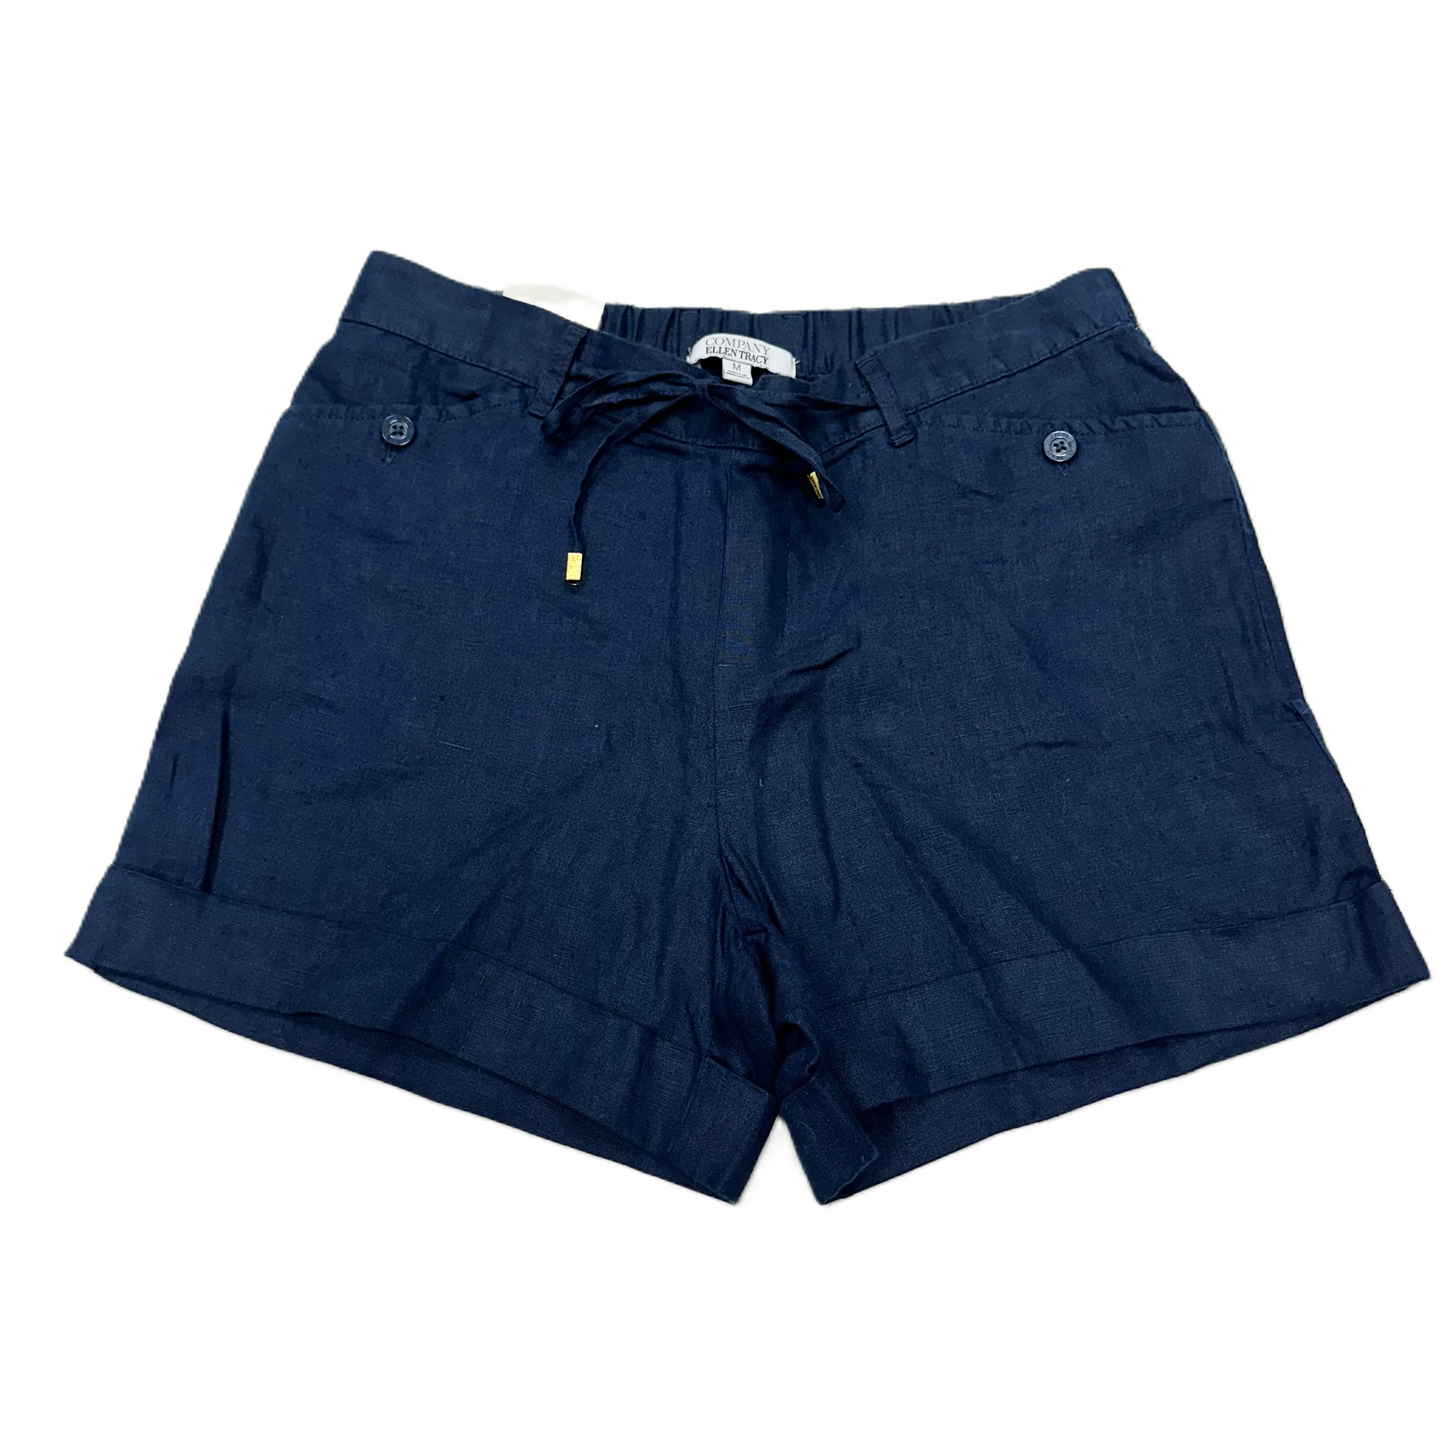 Navy Shorts By Ellen Tracy, Size: M